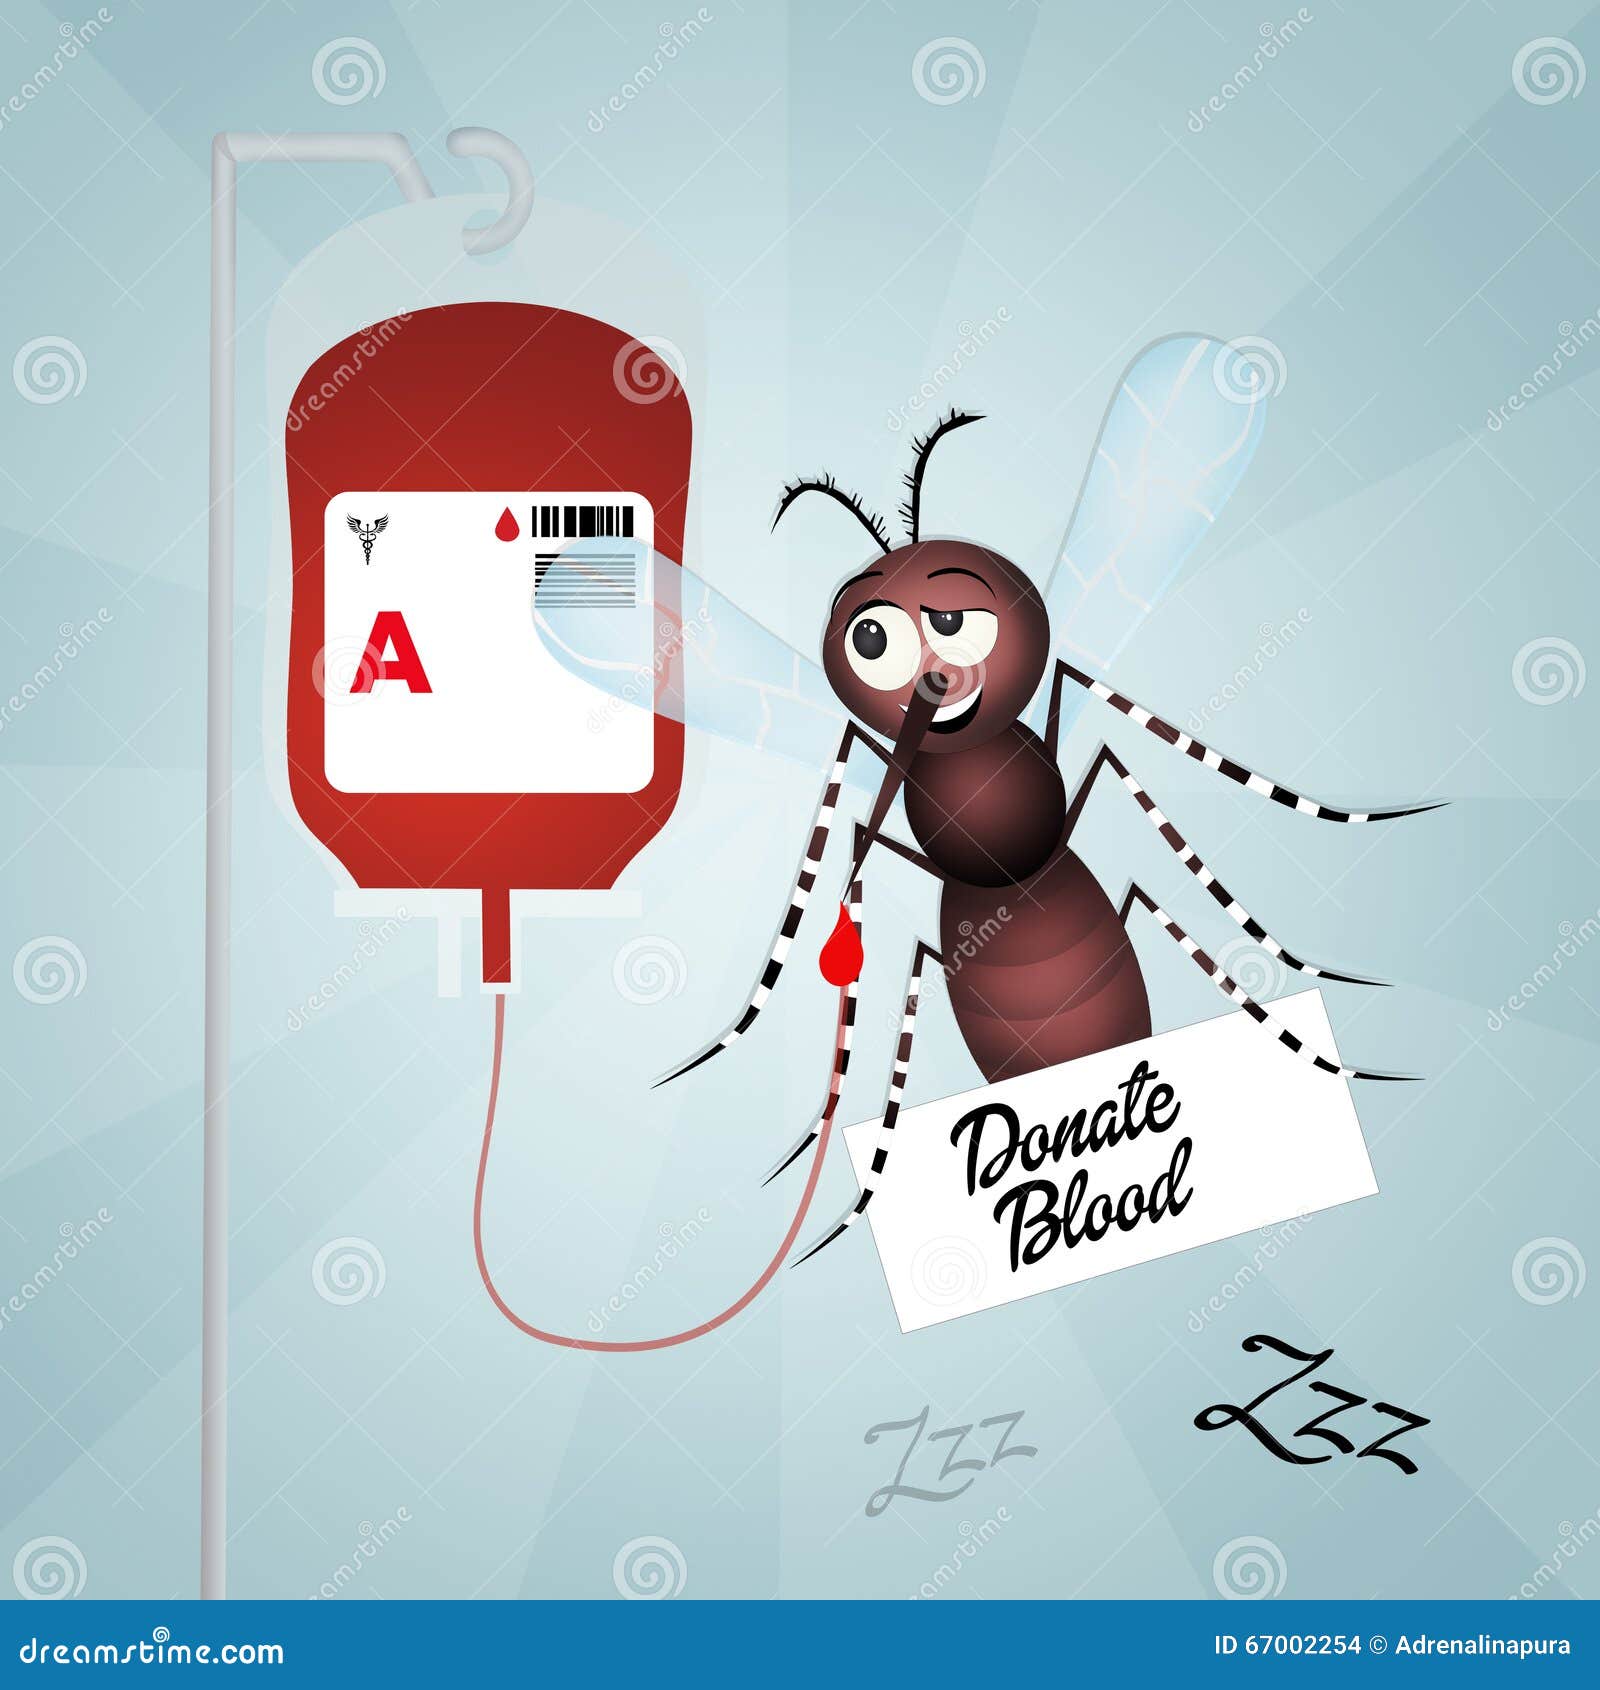 Blood donation stock illustration. Illustration of spray - 67002254